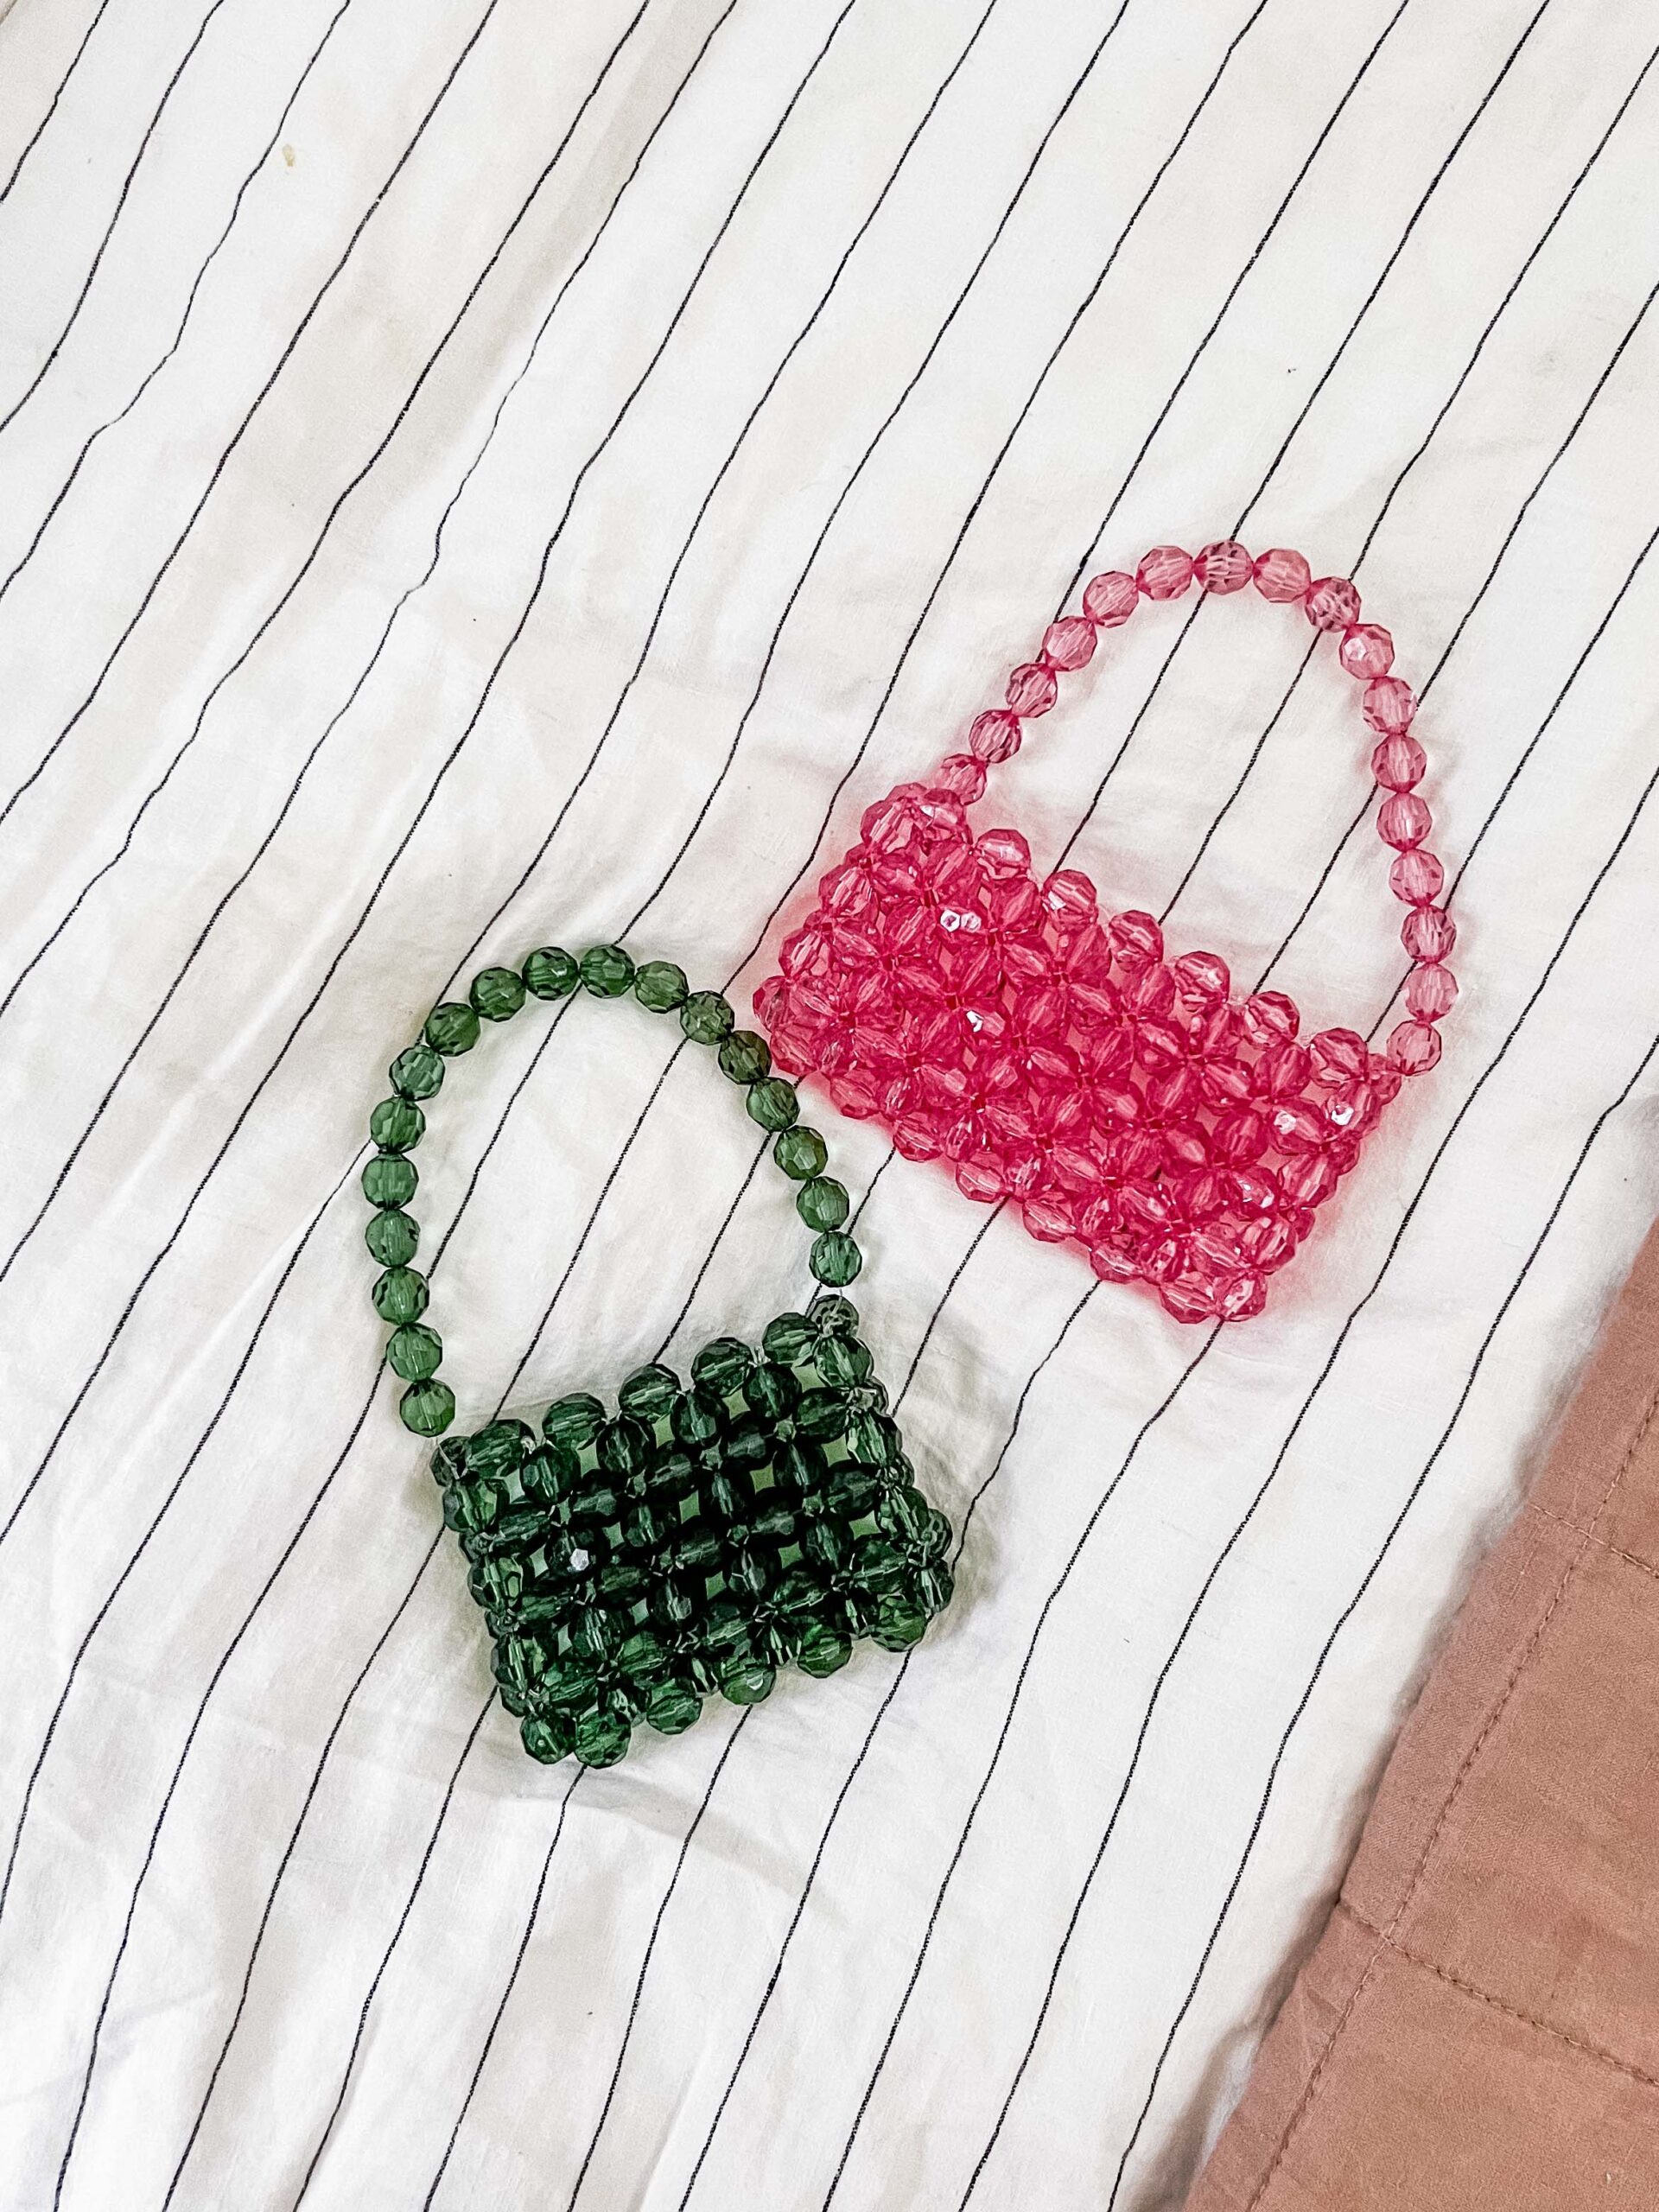 Beads Purse | DIY | Beaded Purse Making | How to make Bead Hand Bag | Pearl  Beaded Bag | Beads Craft - YouTube